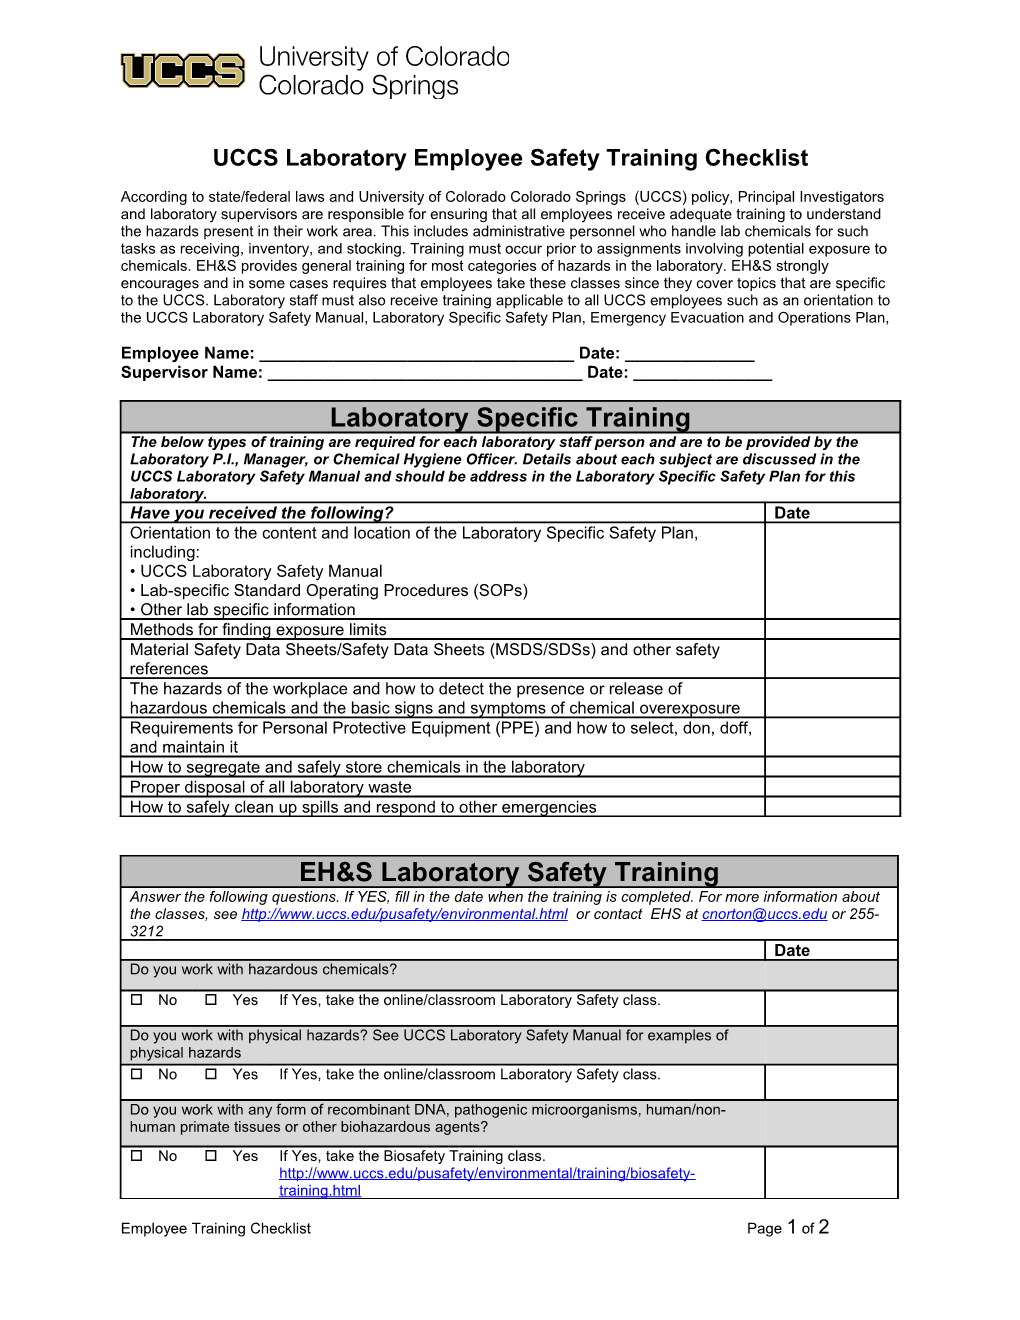 UCCS Laboratory Employee Safety Training Checklist